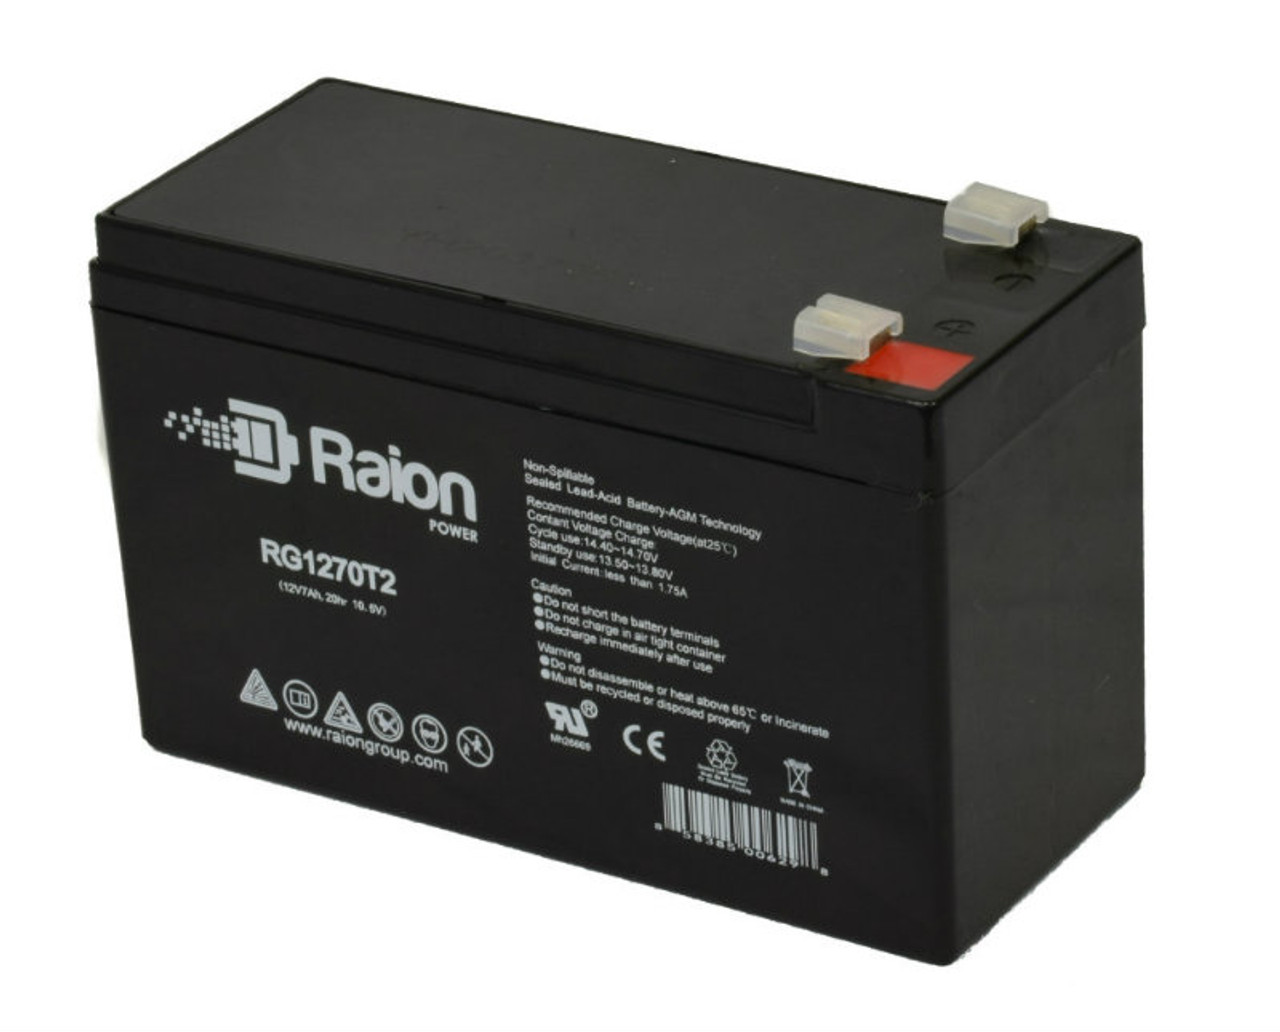 Raion Power RG1270T2 12V 7Ah AGM Battery for Allied Healthcare 138 Schuco-Vac Portable DC Aspirator